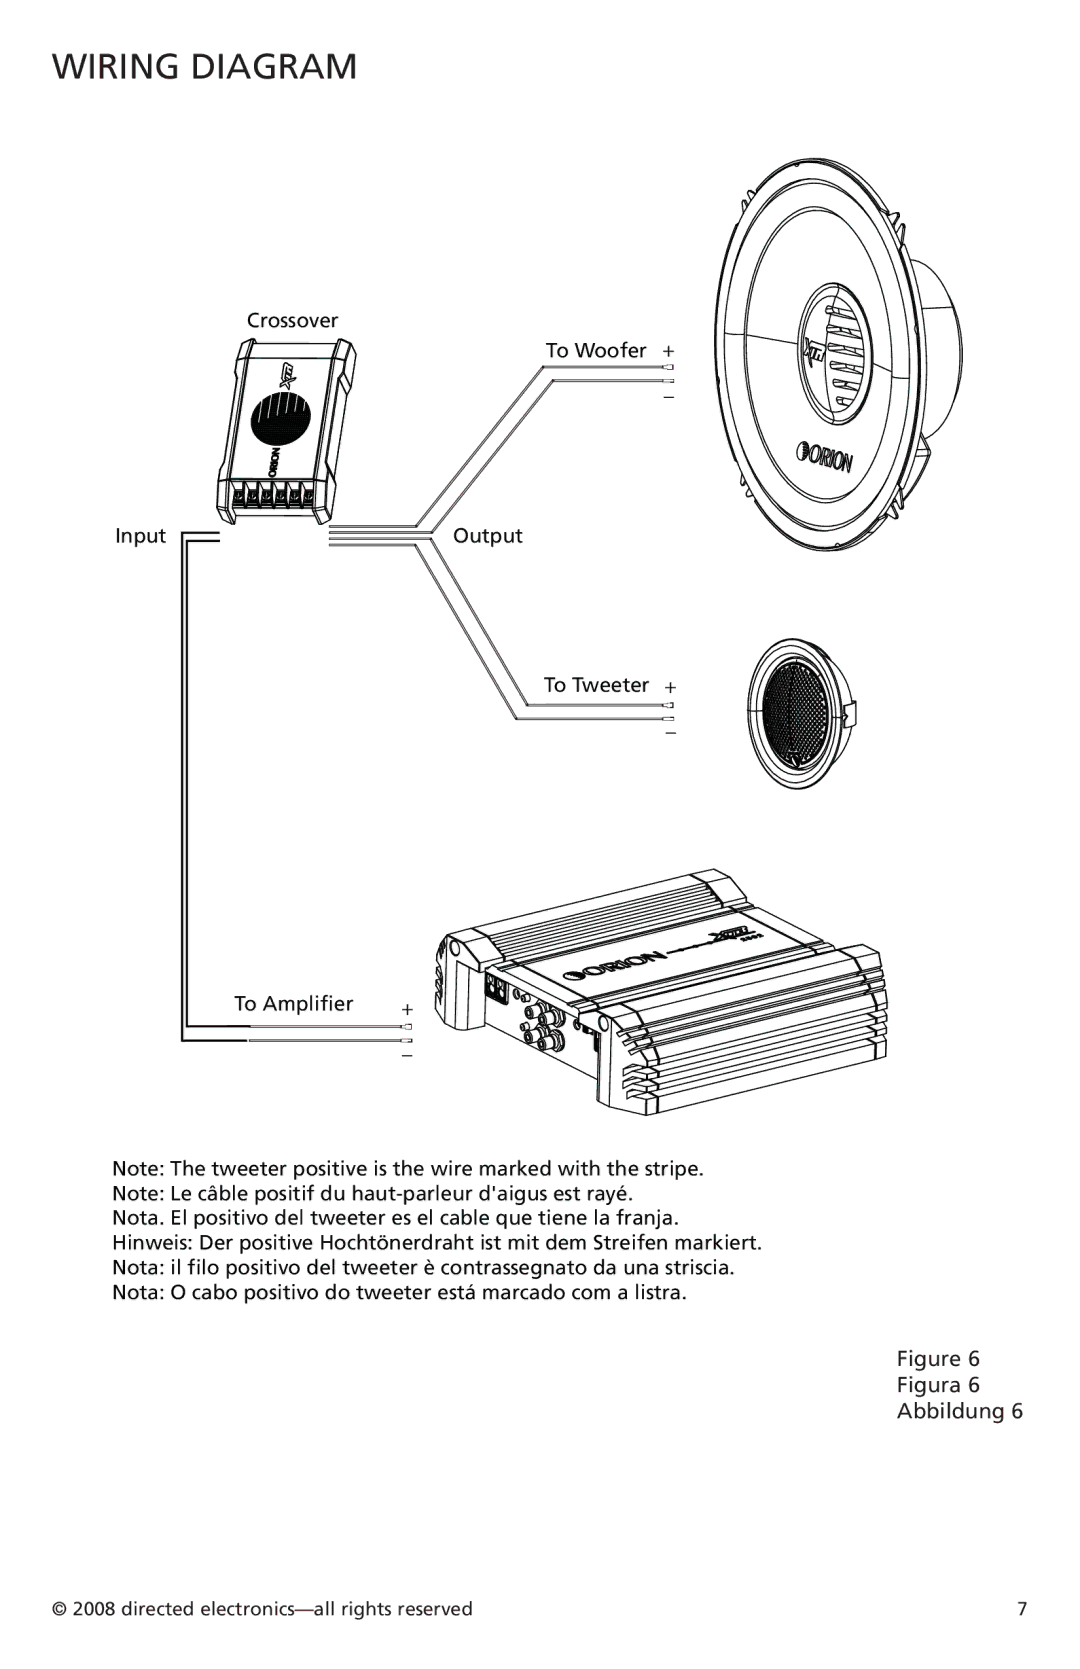 Orion Car Audio XTR62, XTR52 owner manual Wiring Diagram, Figura Abbildung 